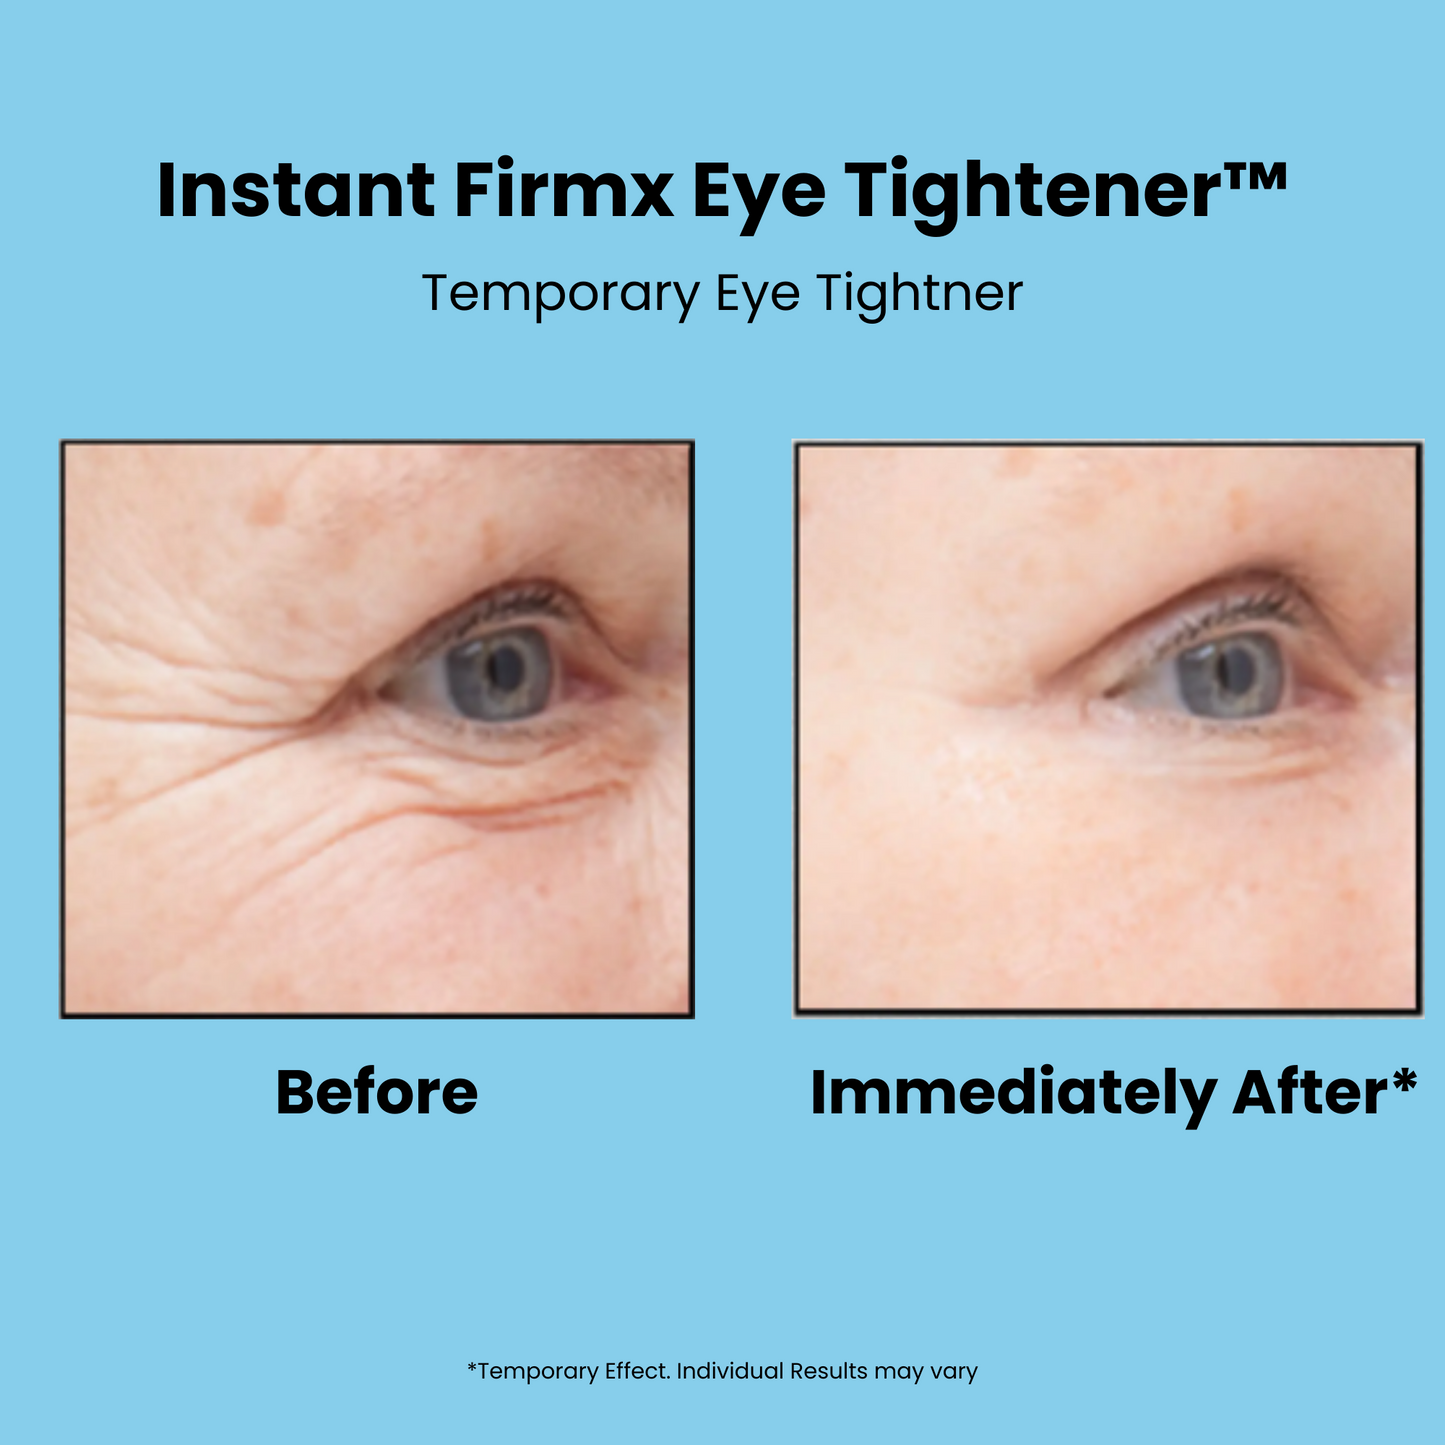 The Instant Firmx Eye Tightner